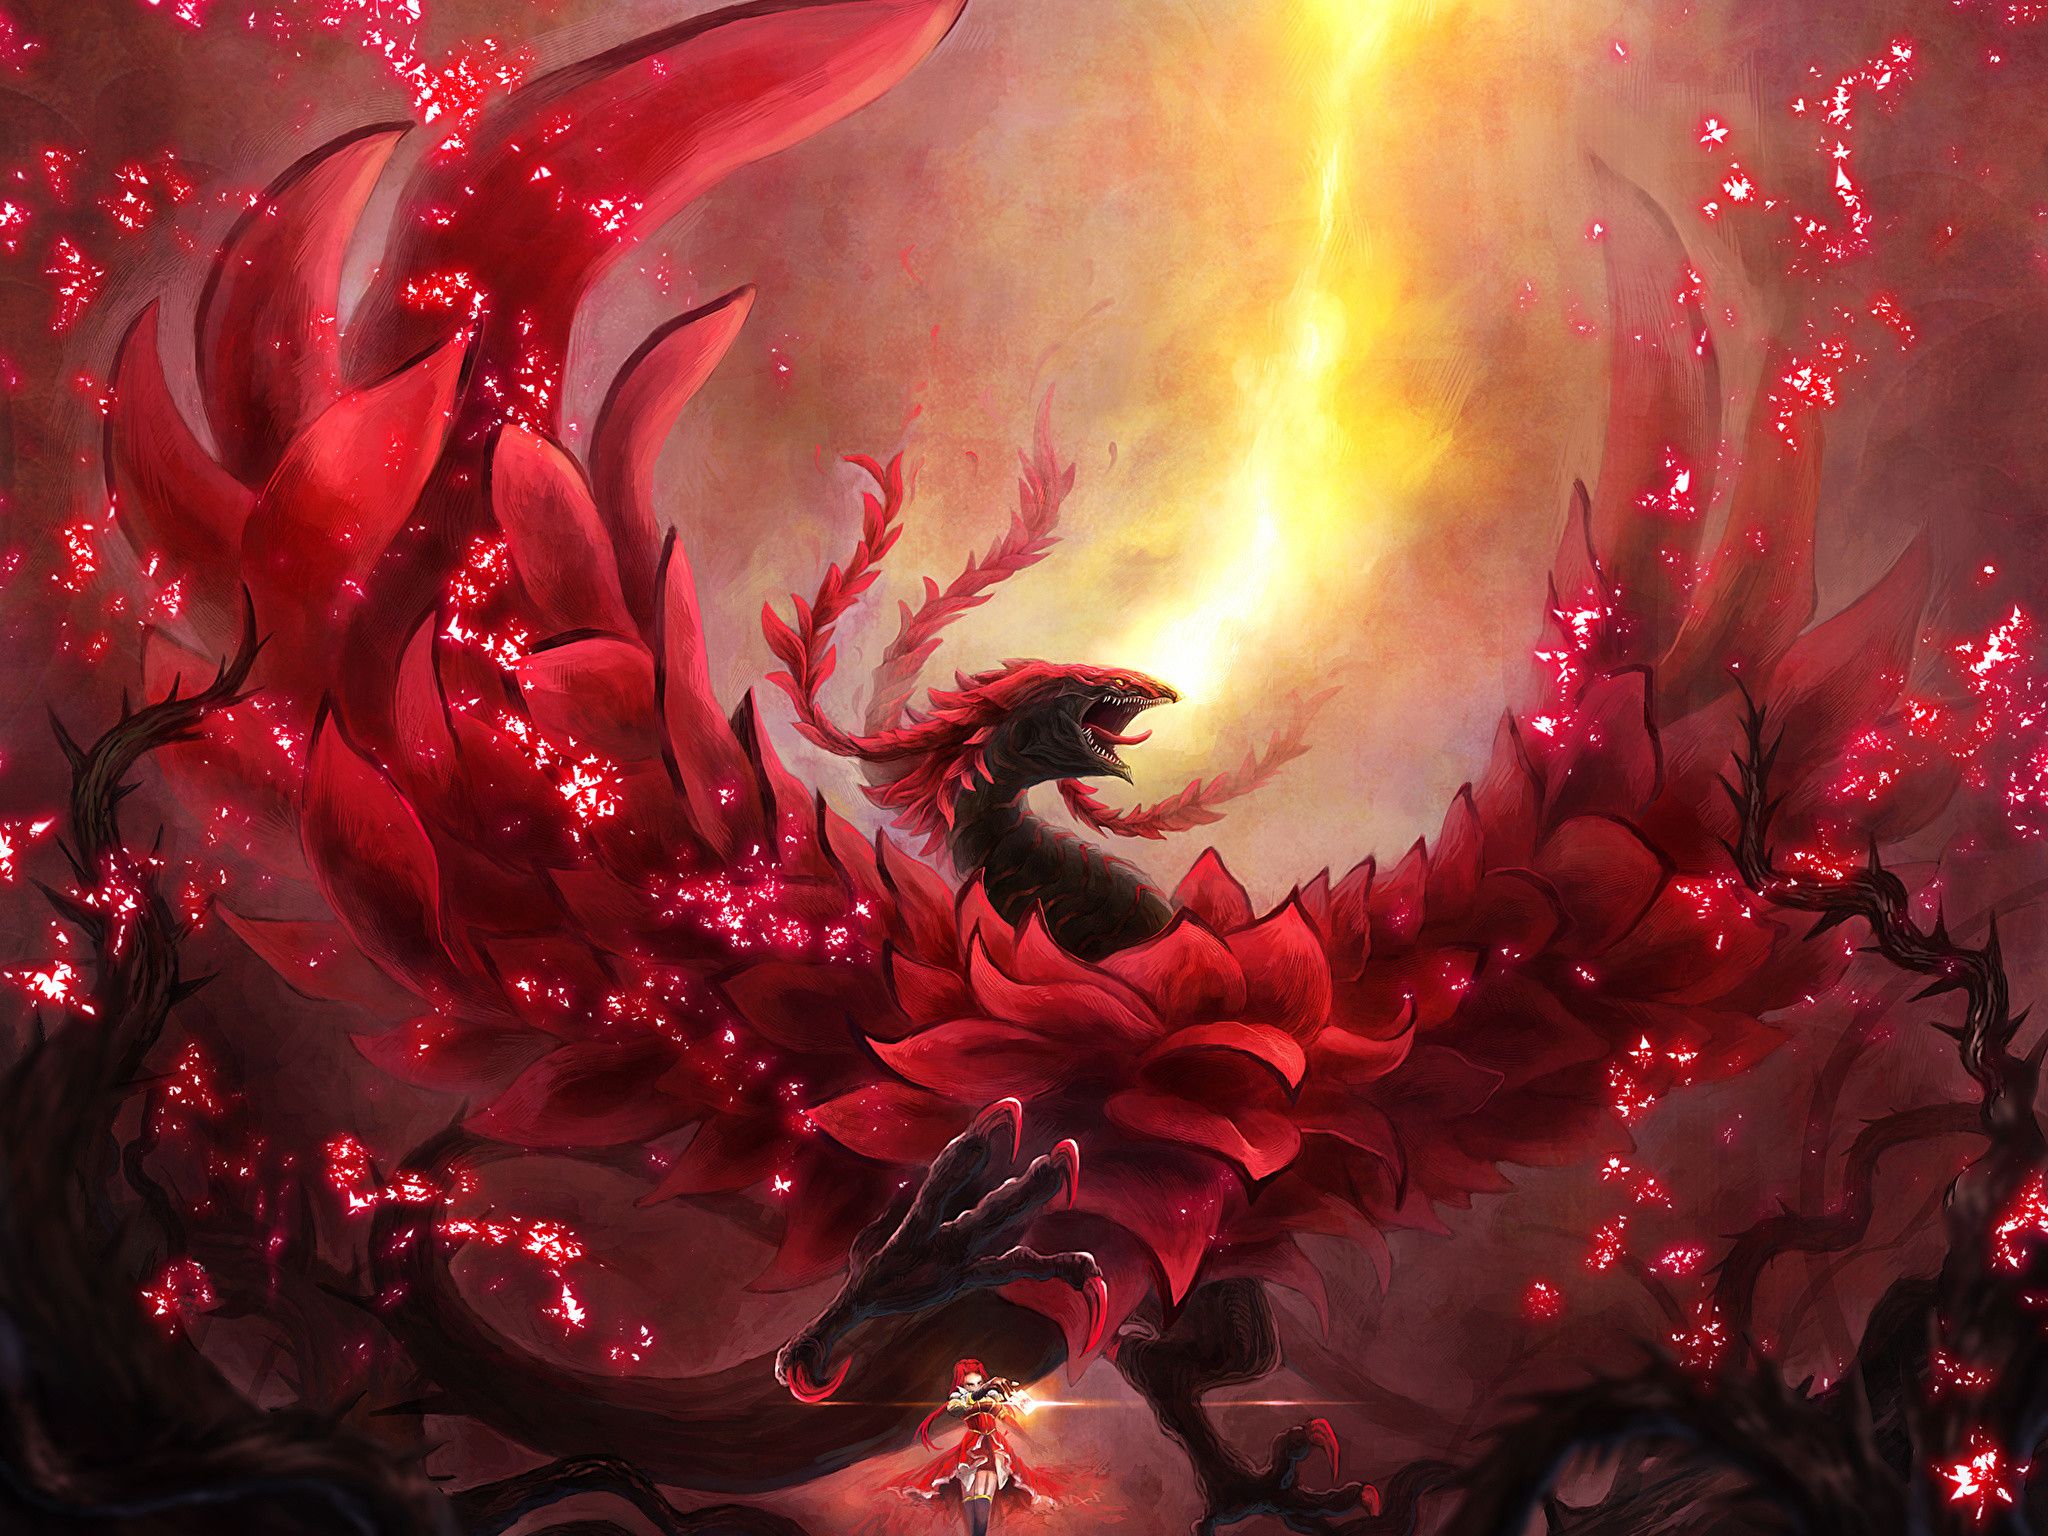 Black Rose Dragon Wallpaper background picture